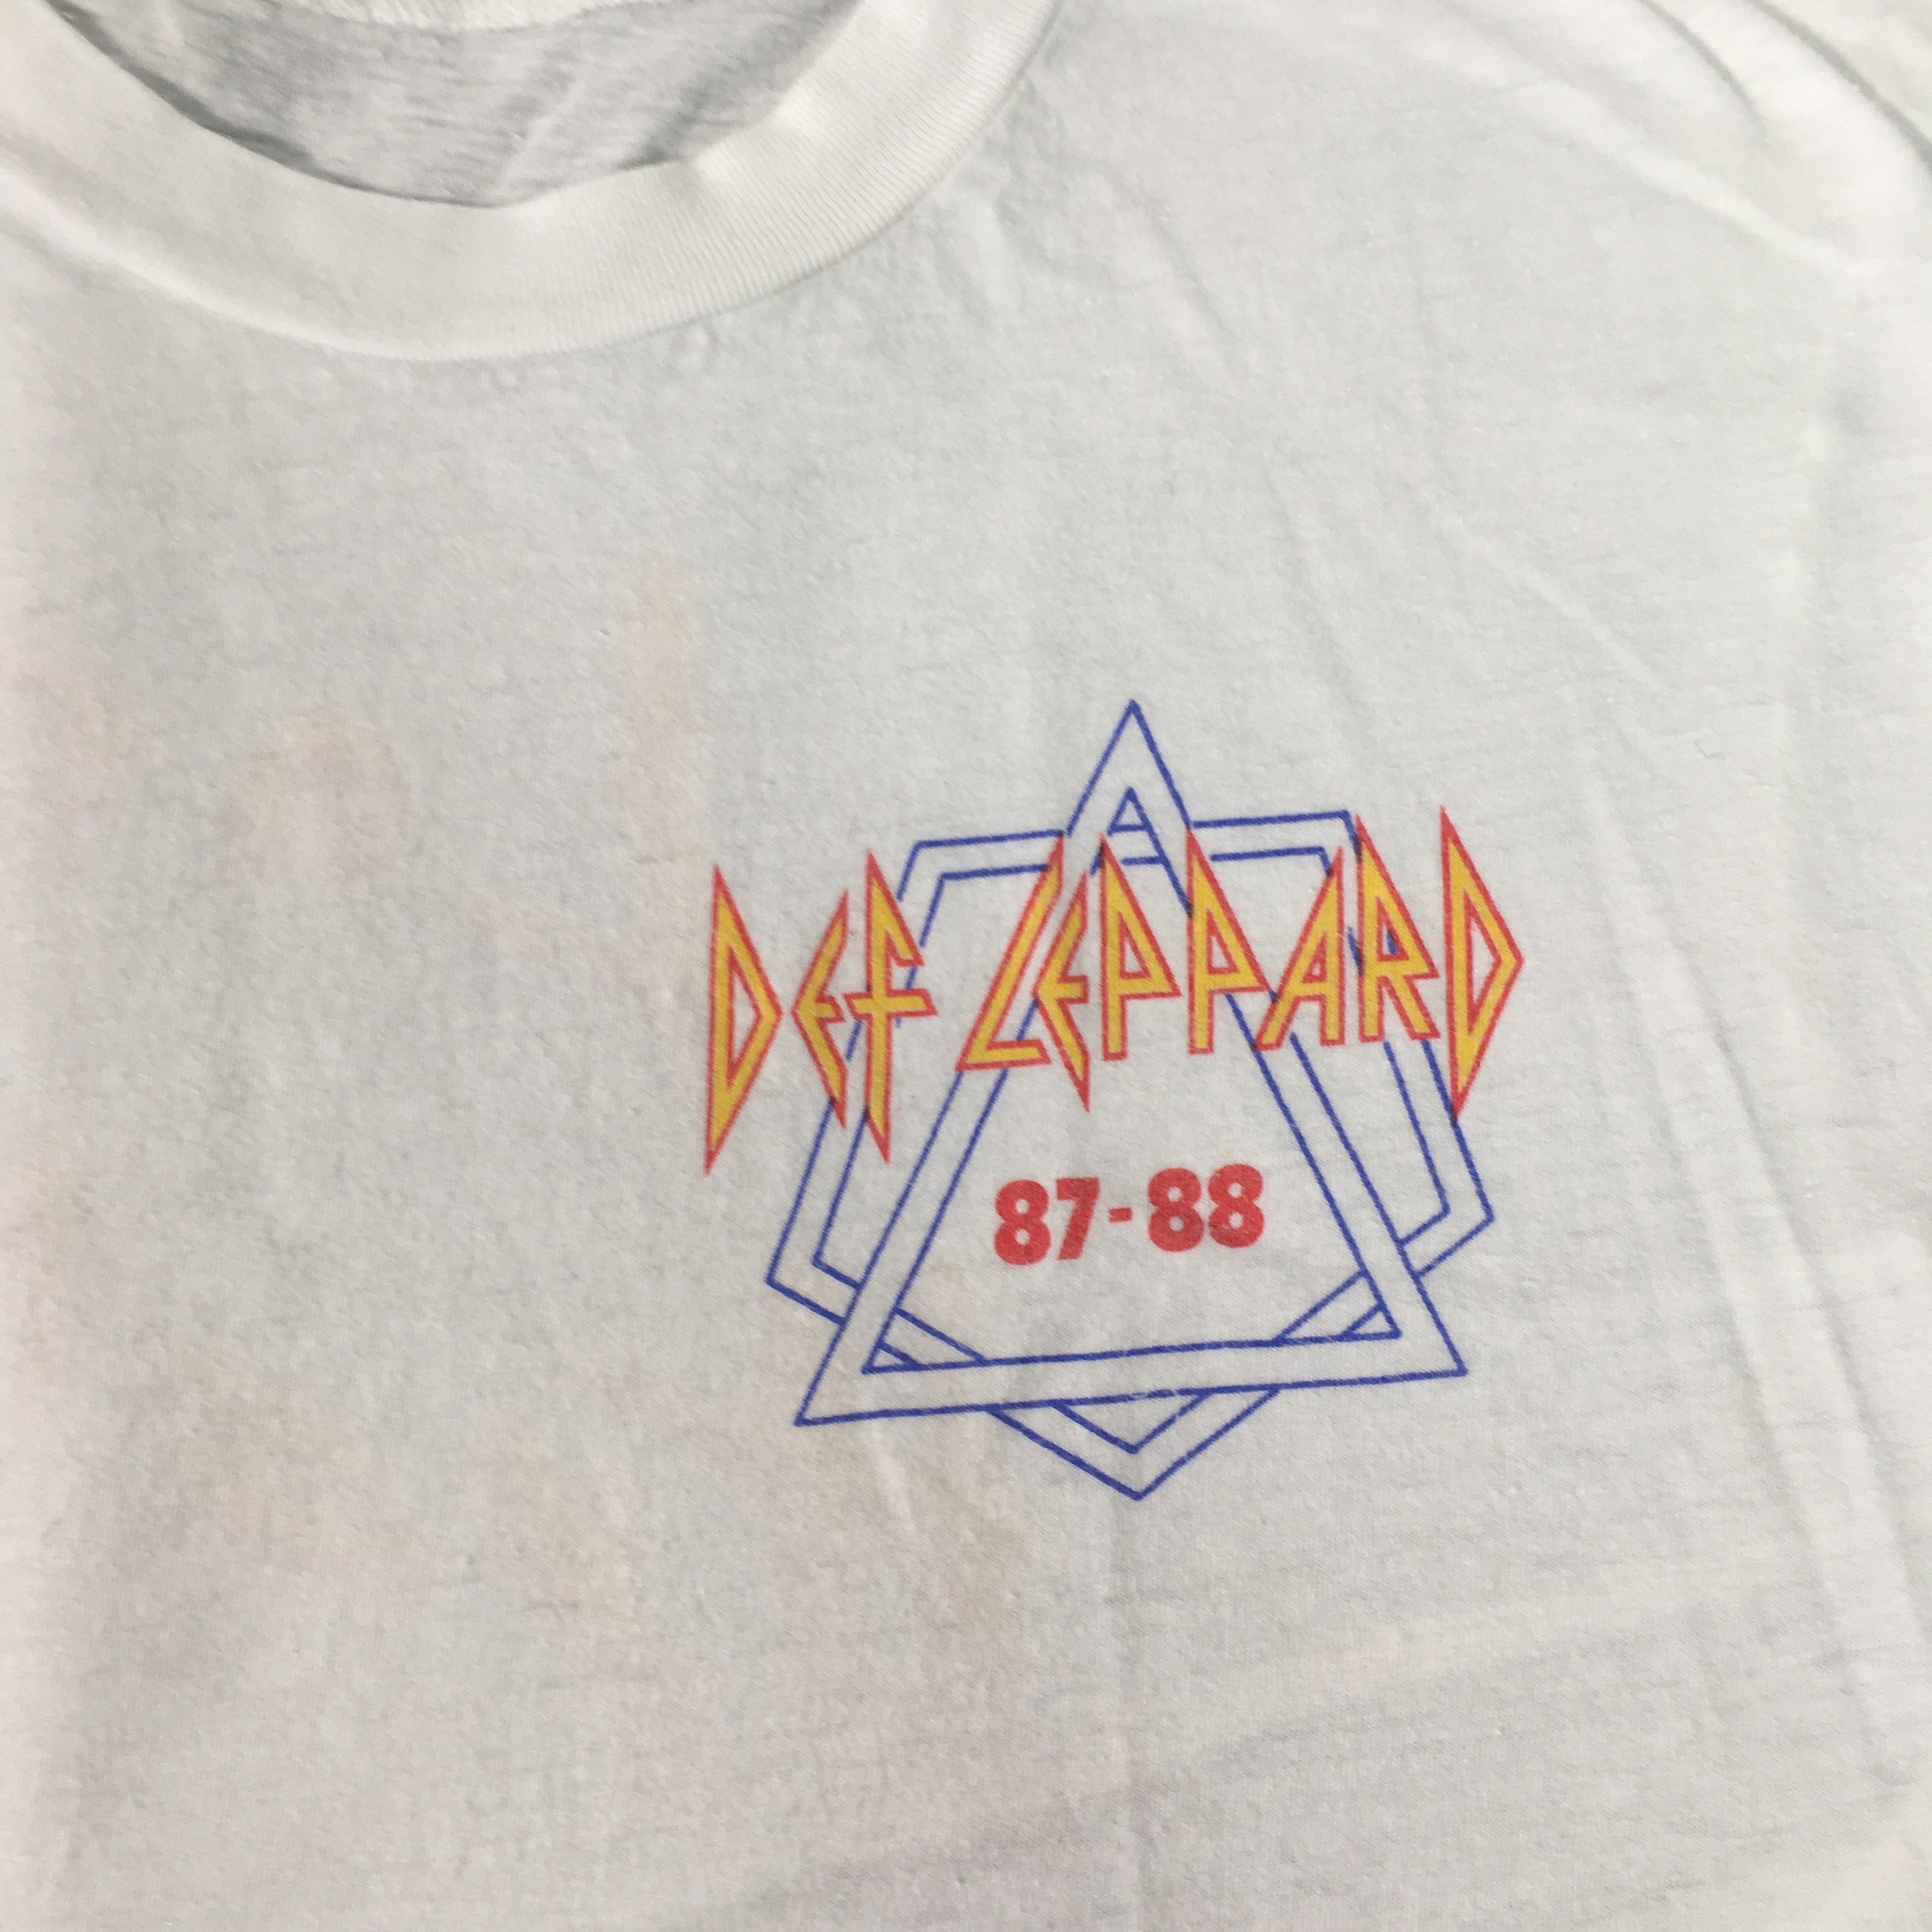 Vintage Leppard "Local Hysteria" T-shirt | jointcustodydc